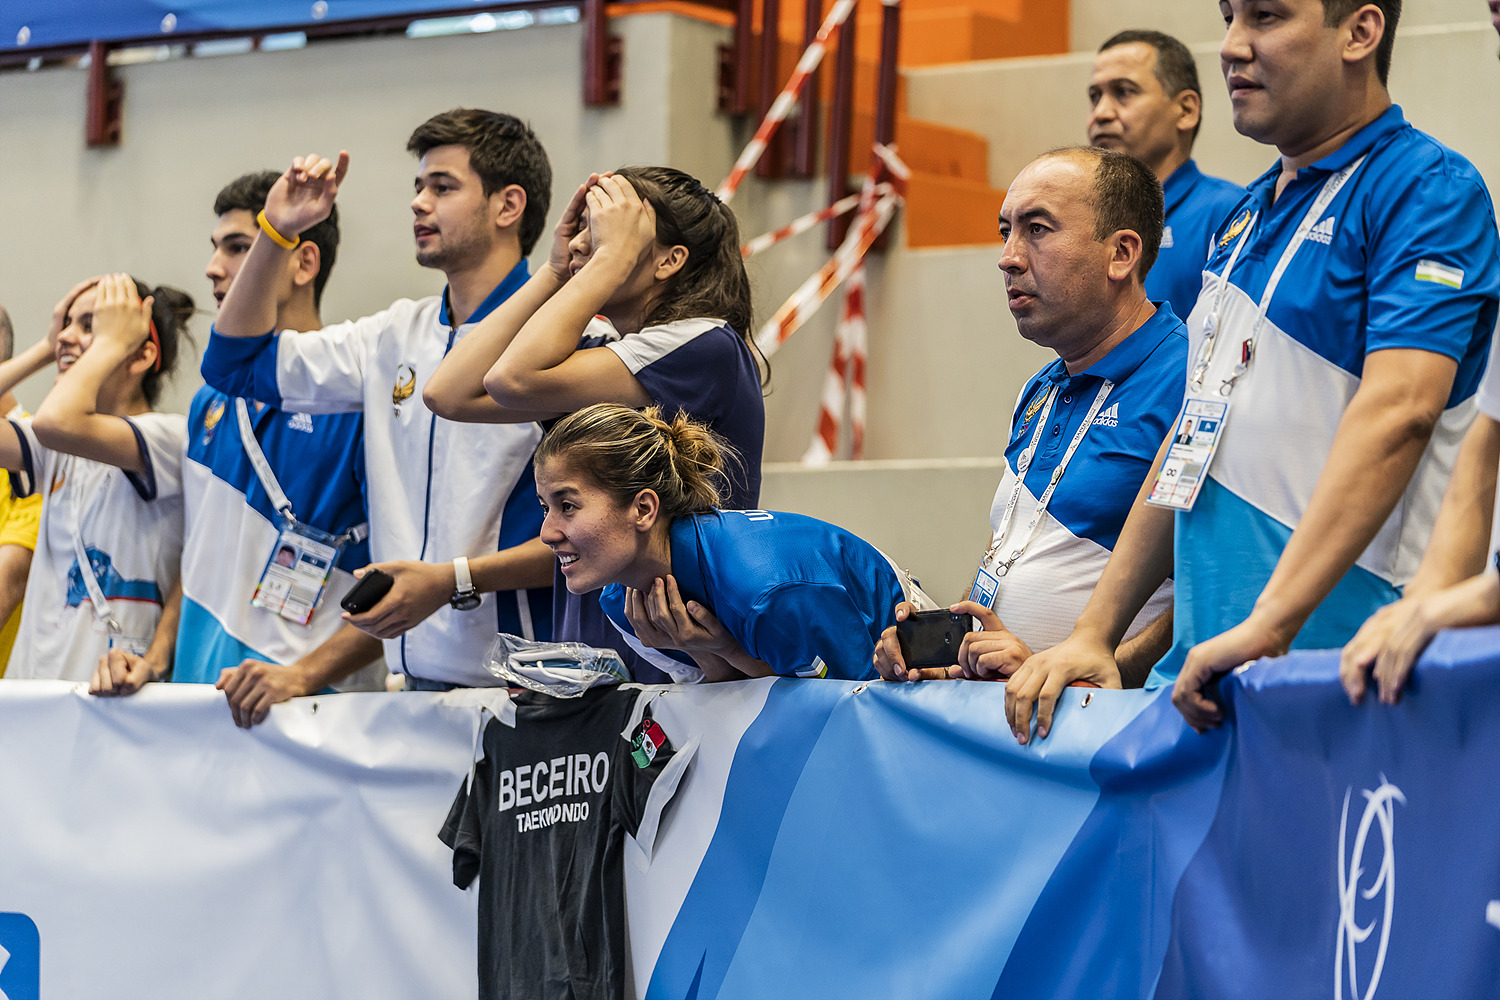 Ahmadi Soroush 12 luglio 2019 - Fotografi Universiade - Taekwondo Foto Antonello Naddeo 5